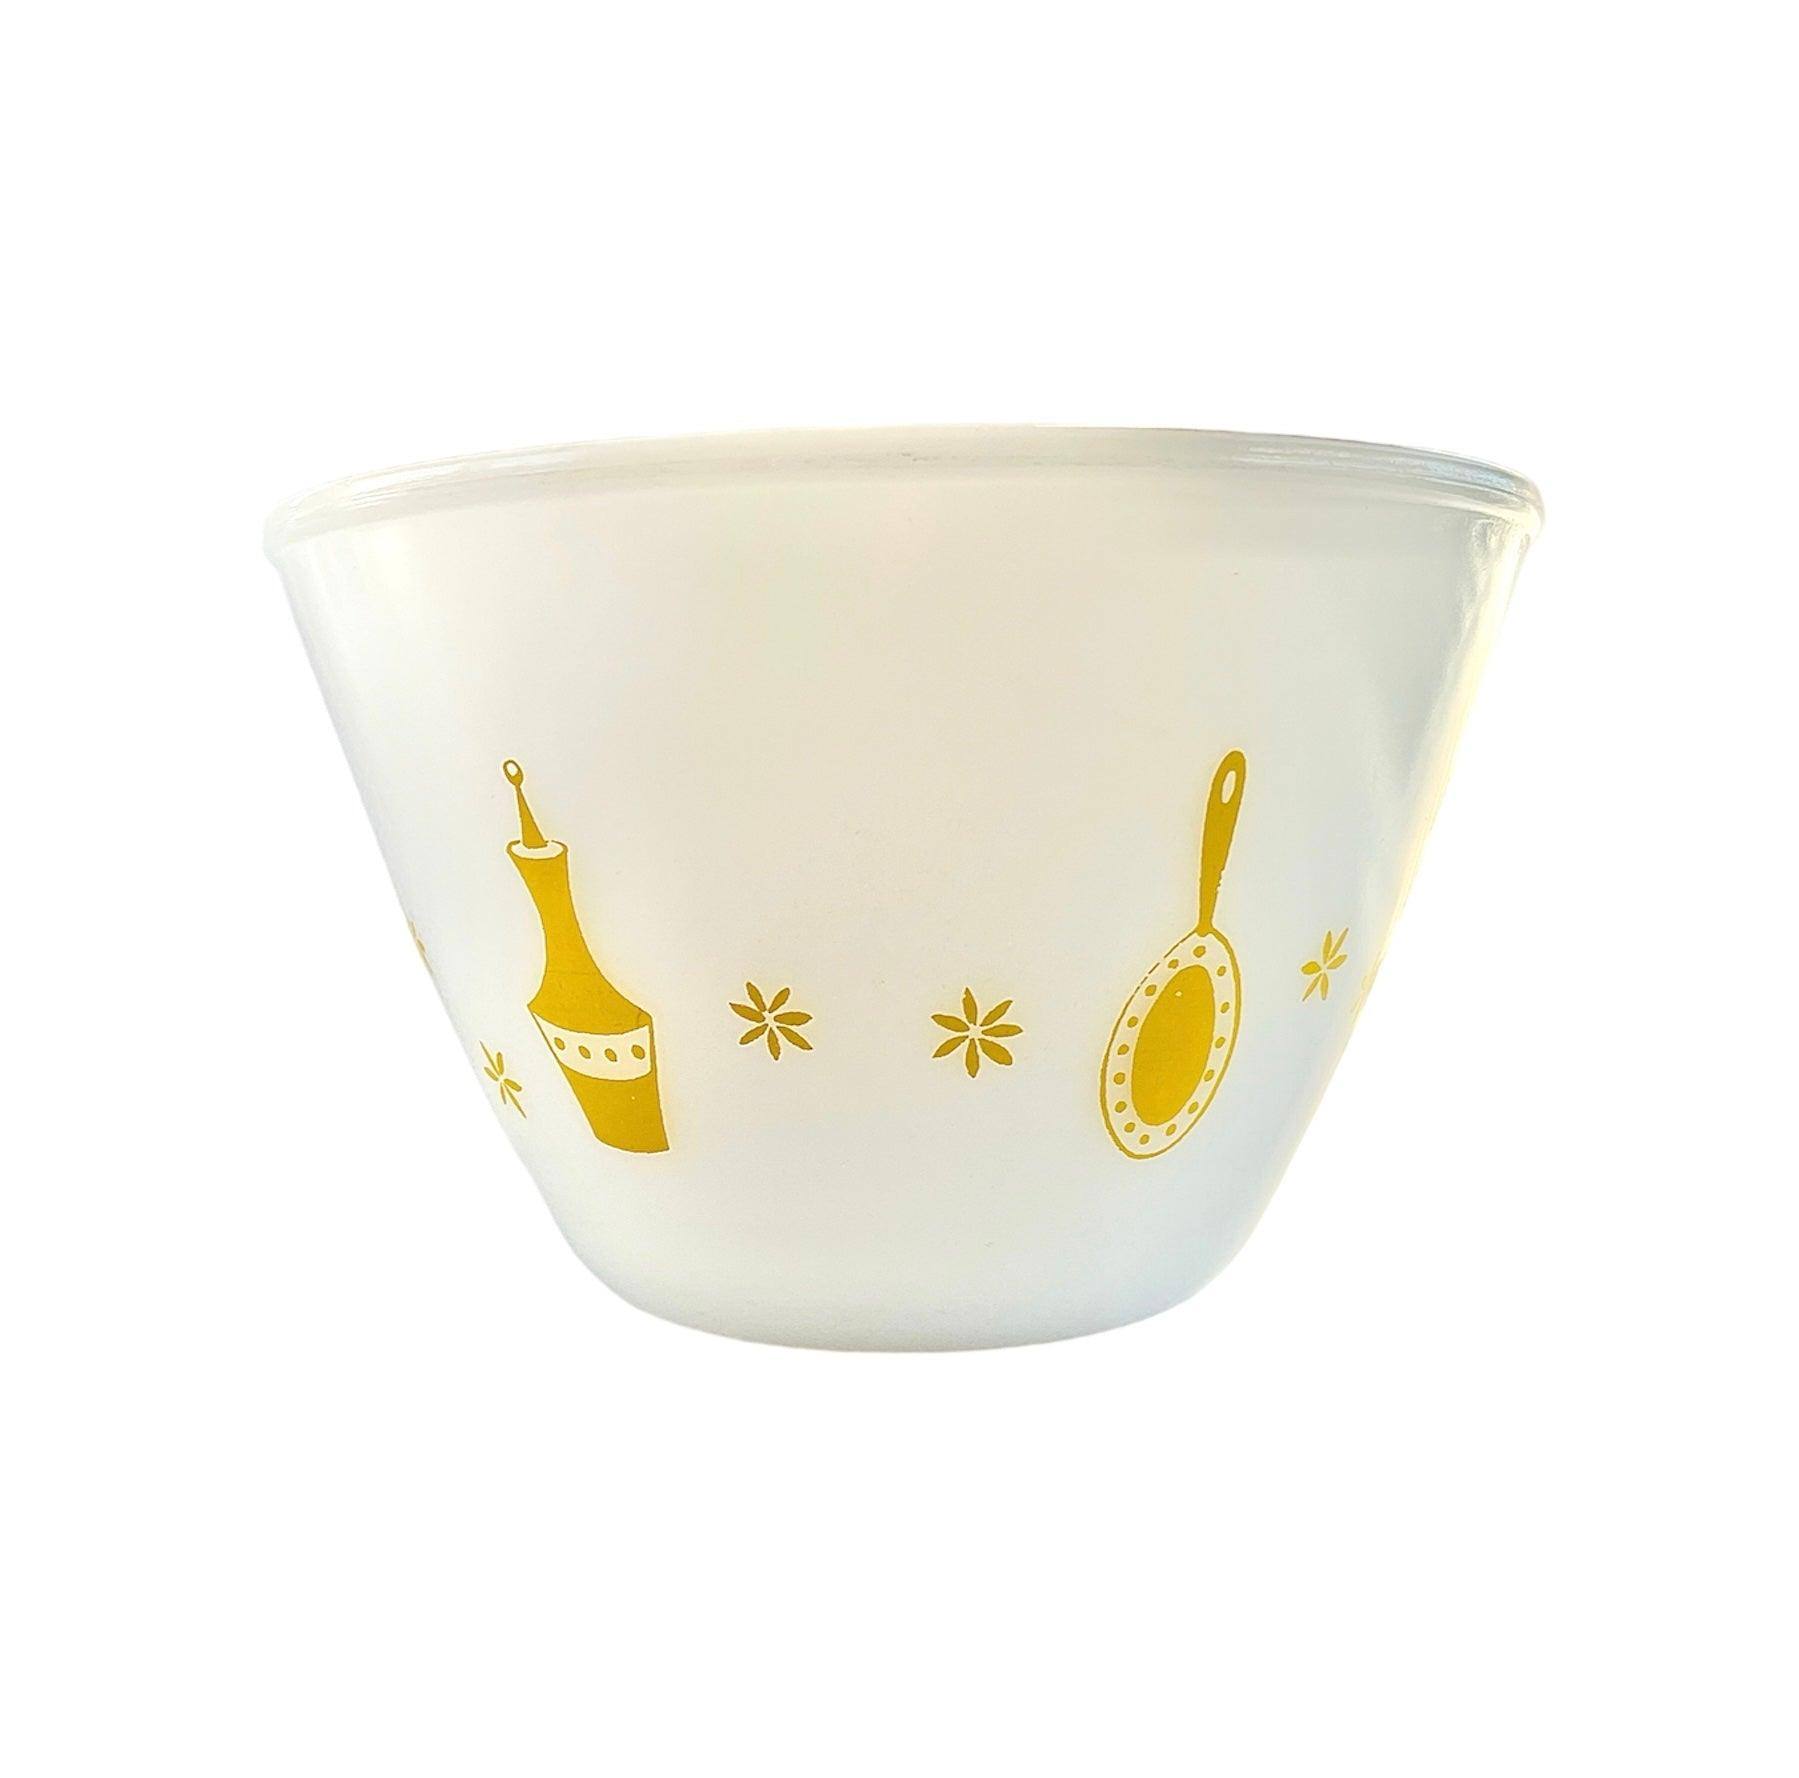 Vintage White Mixing Bowl with Yellow Motif - SOSC Home